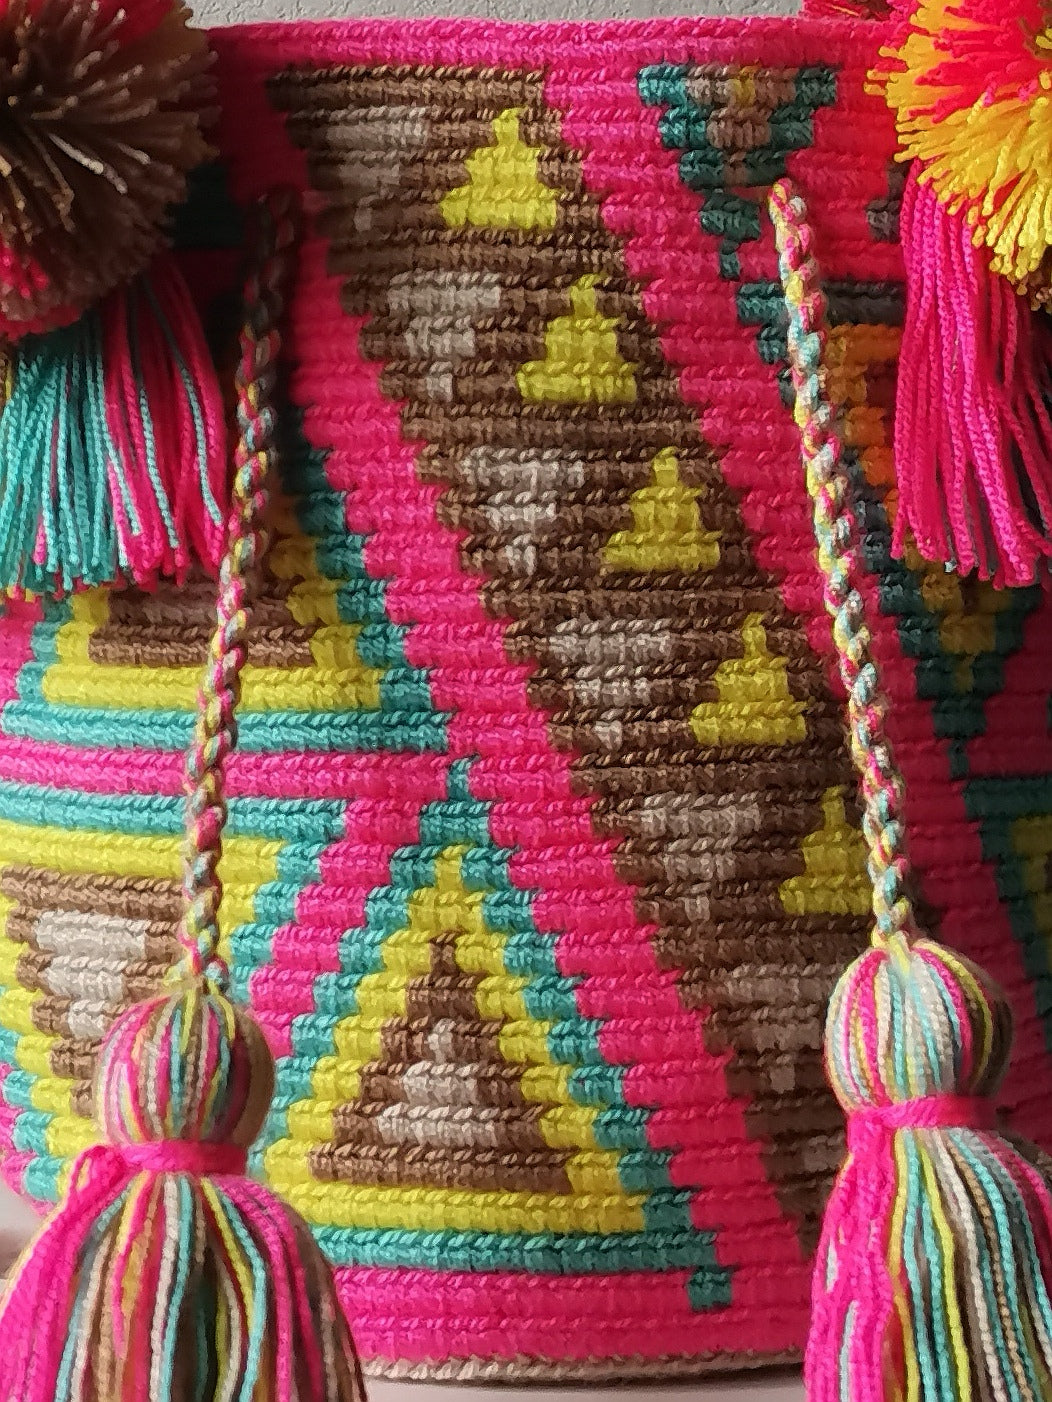 Bright pink and yellow S/M mochila handbag